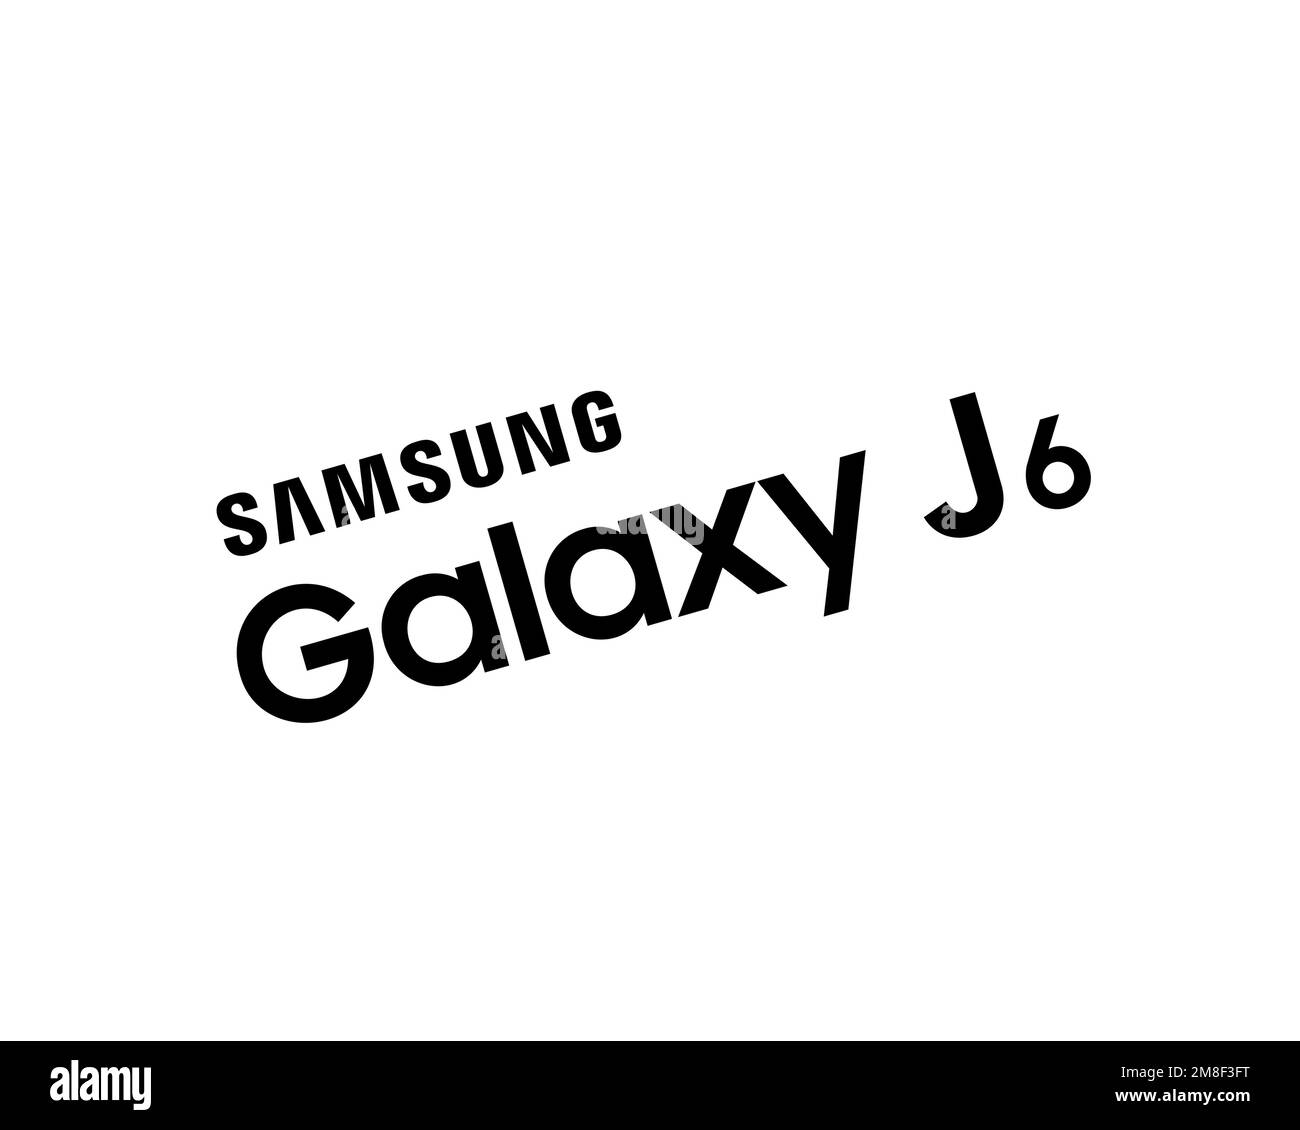 File:Samsung Galaxy J6.png - Wikimedia Commons